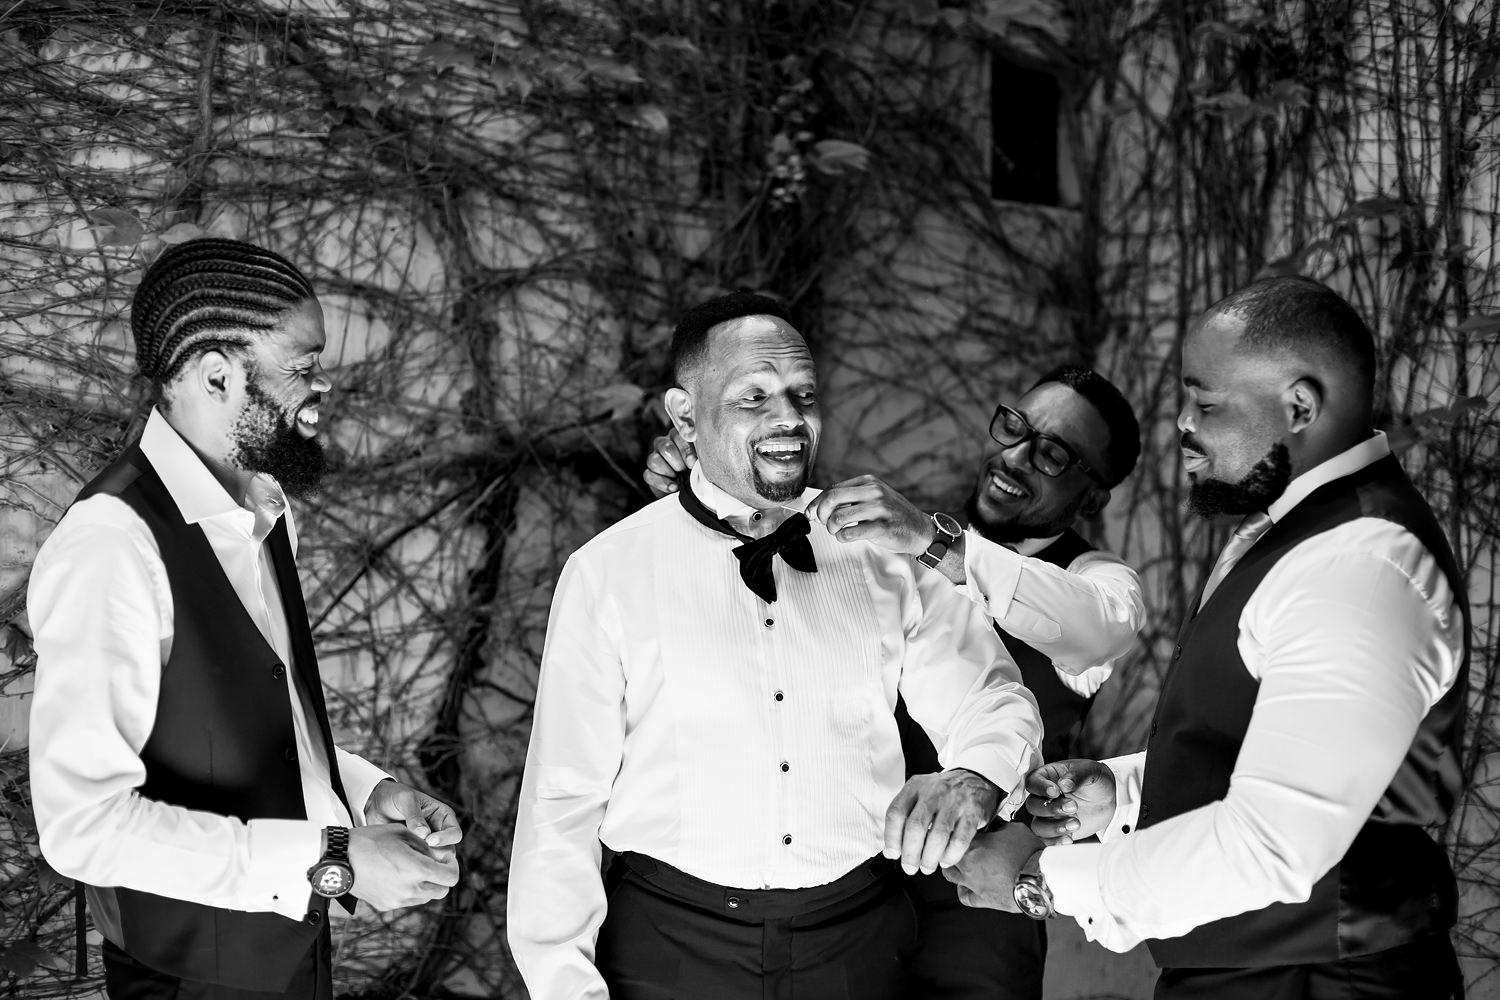 Black and white image of groomsmen dressing the groom